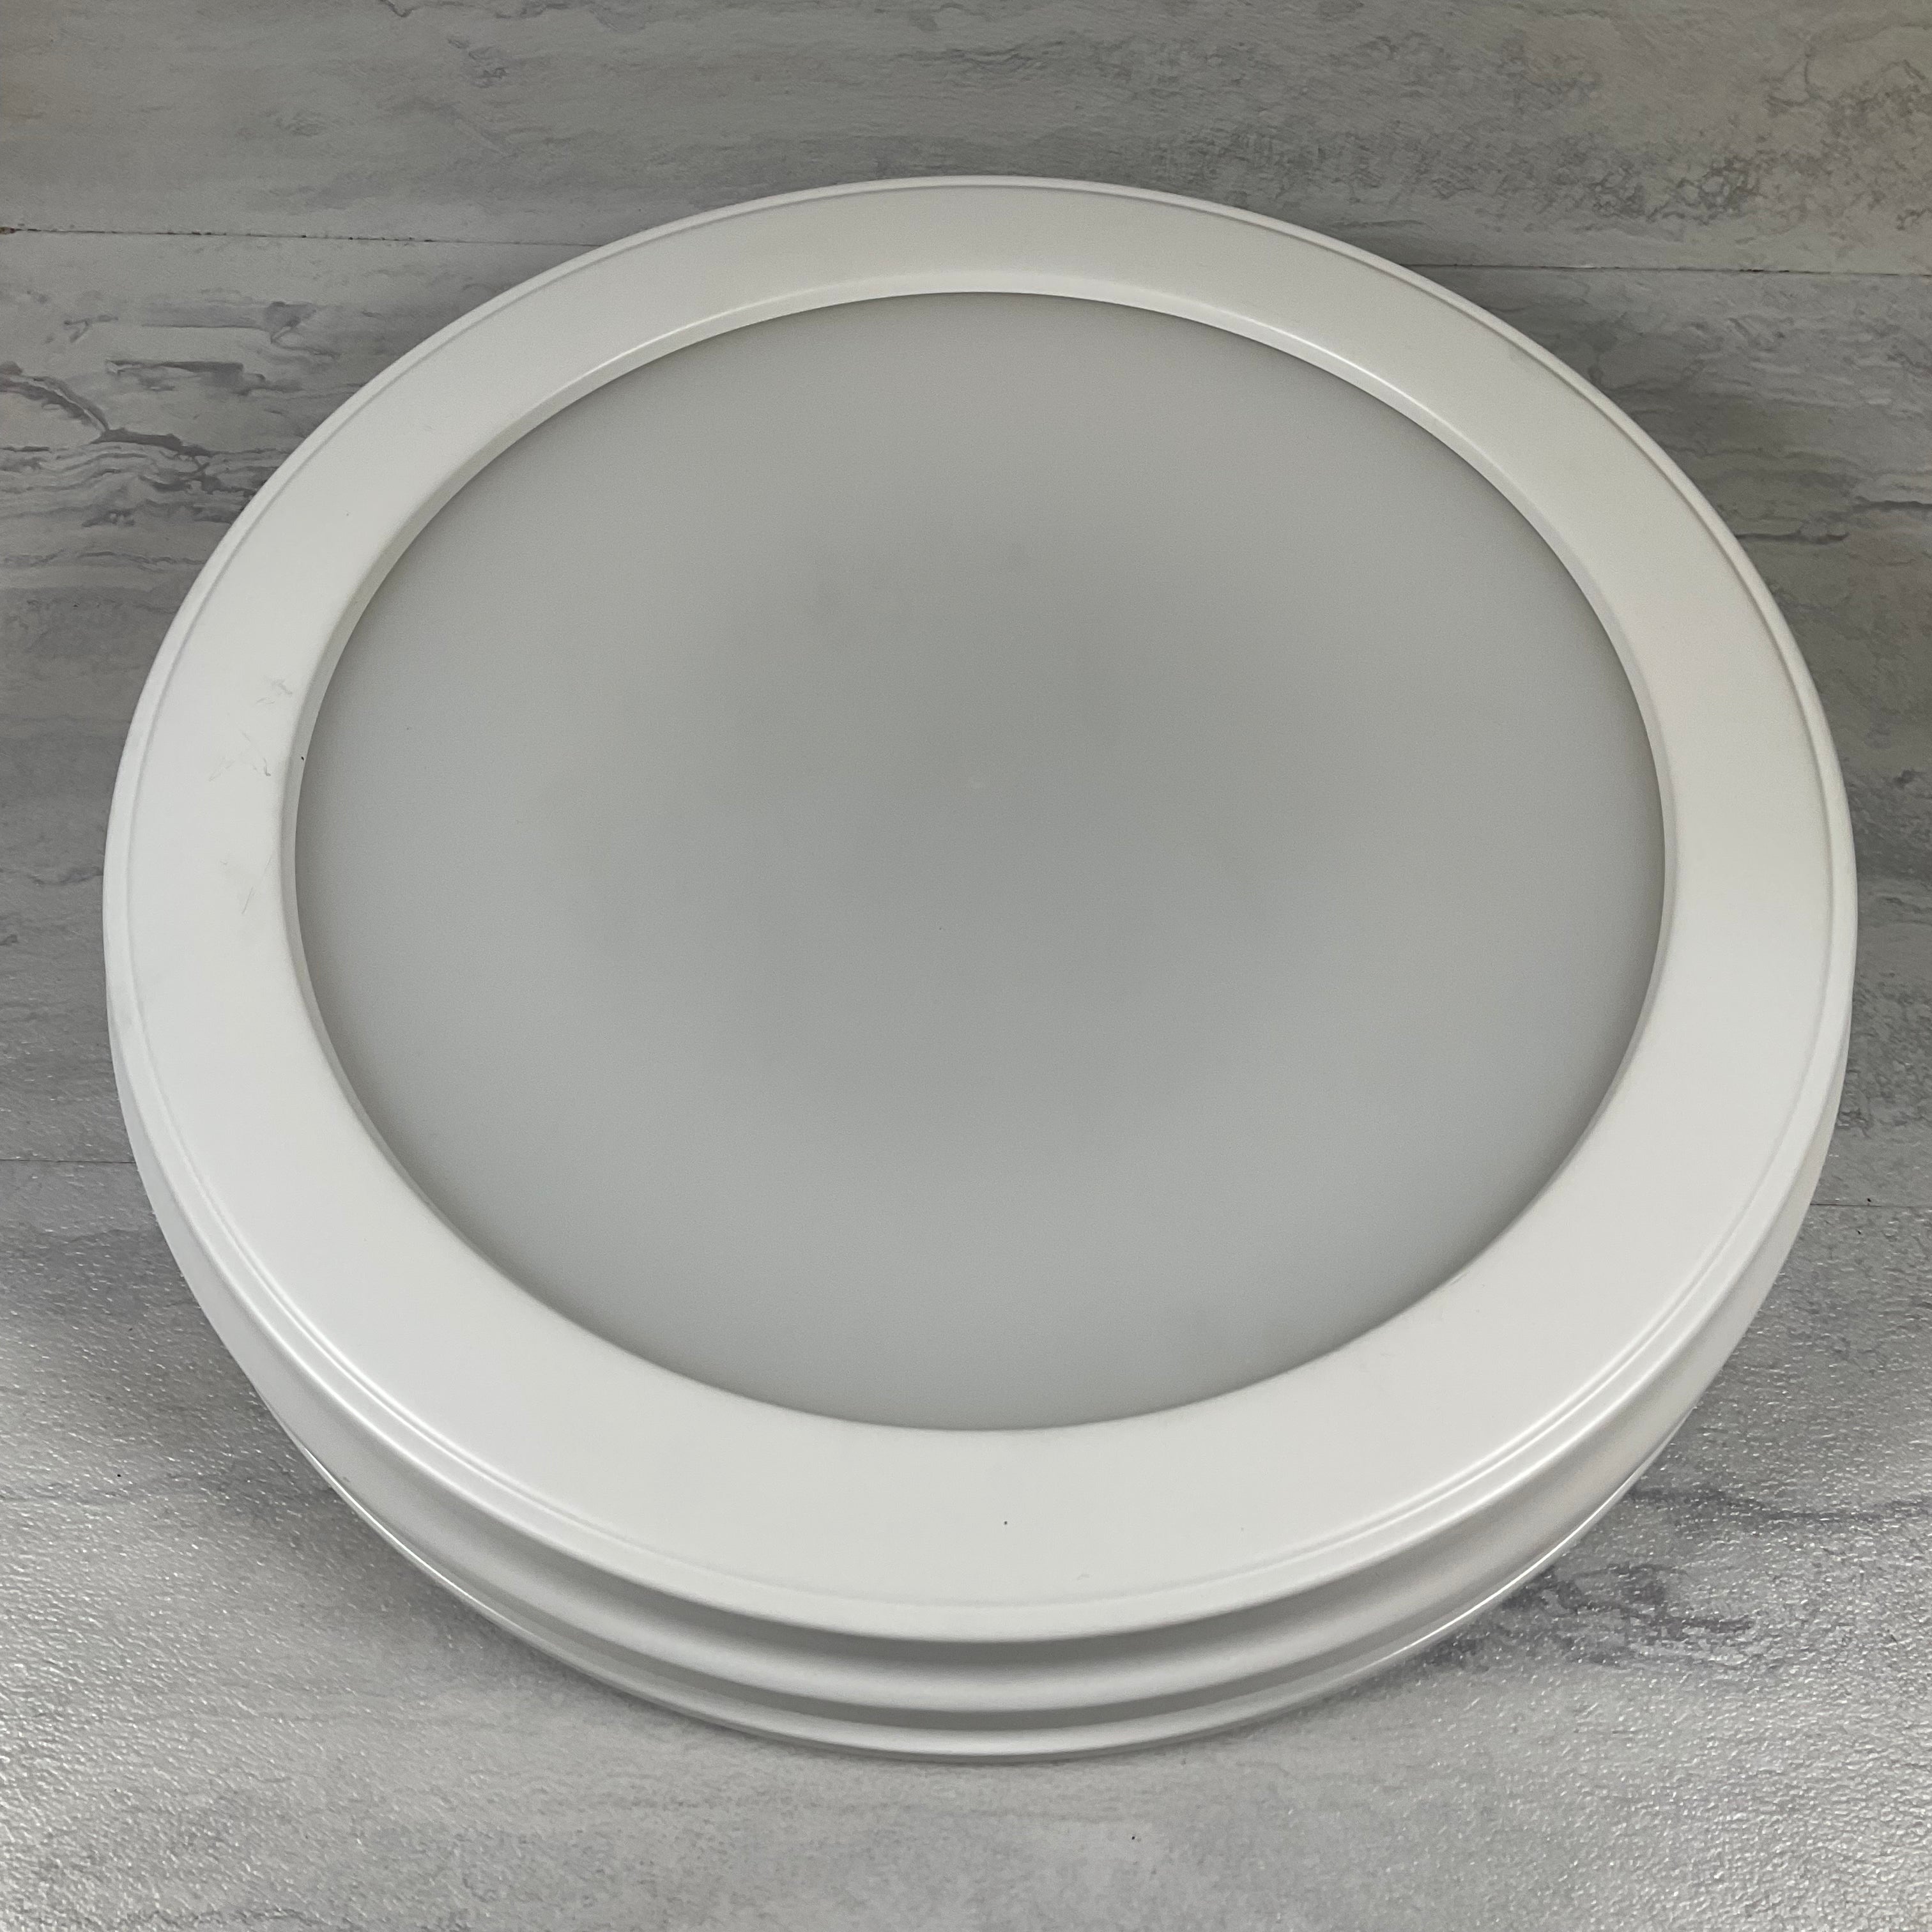 Broan-NuTone White 110 CFM Ceiling Humidity Sensing Bathroom Exhaust Fan (7007793381559)